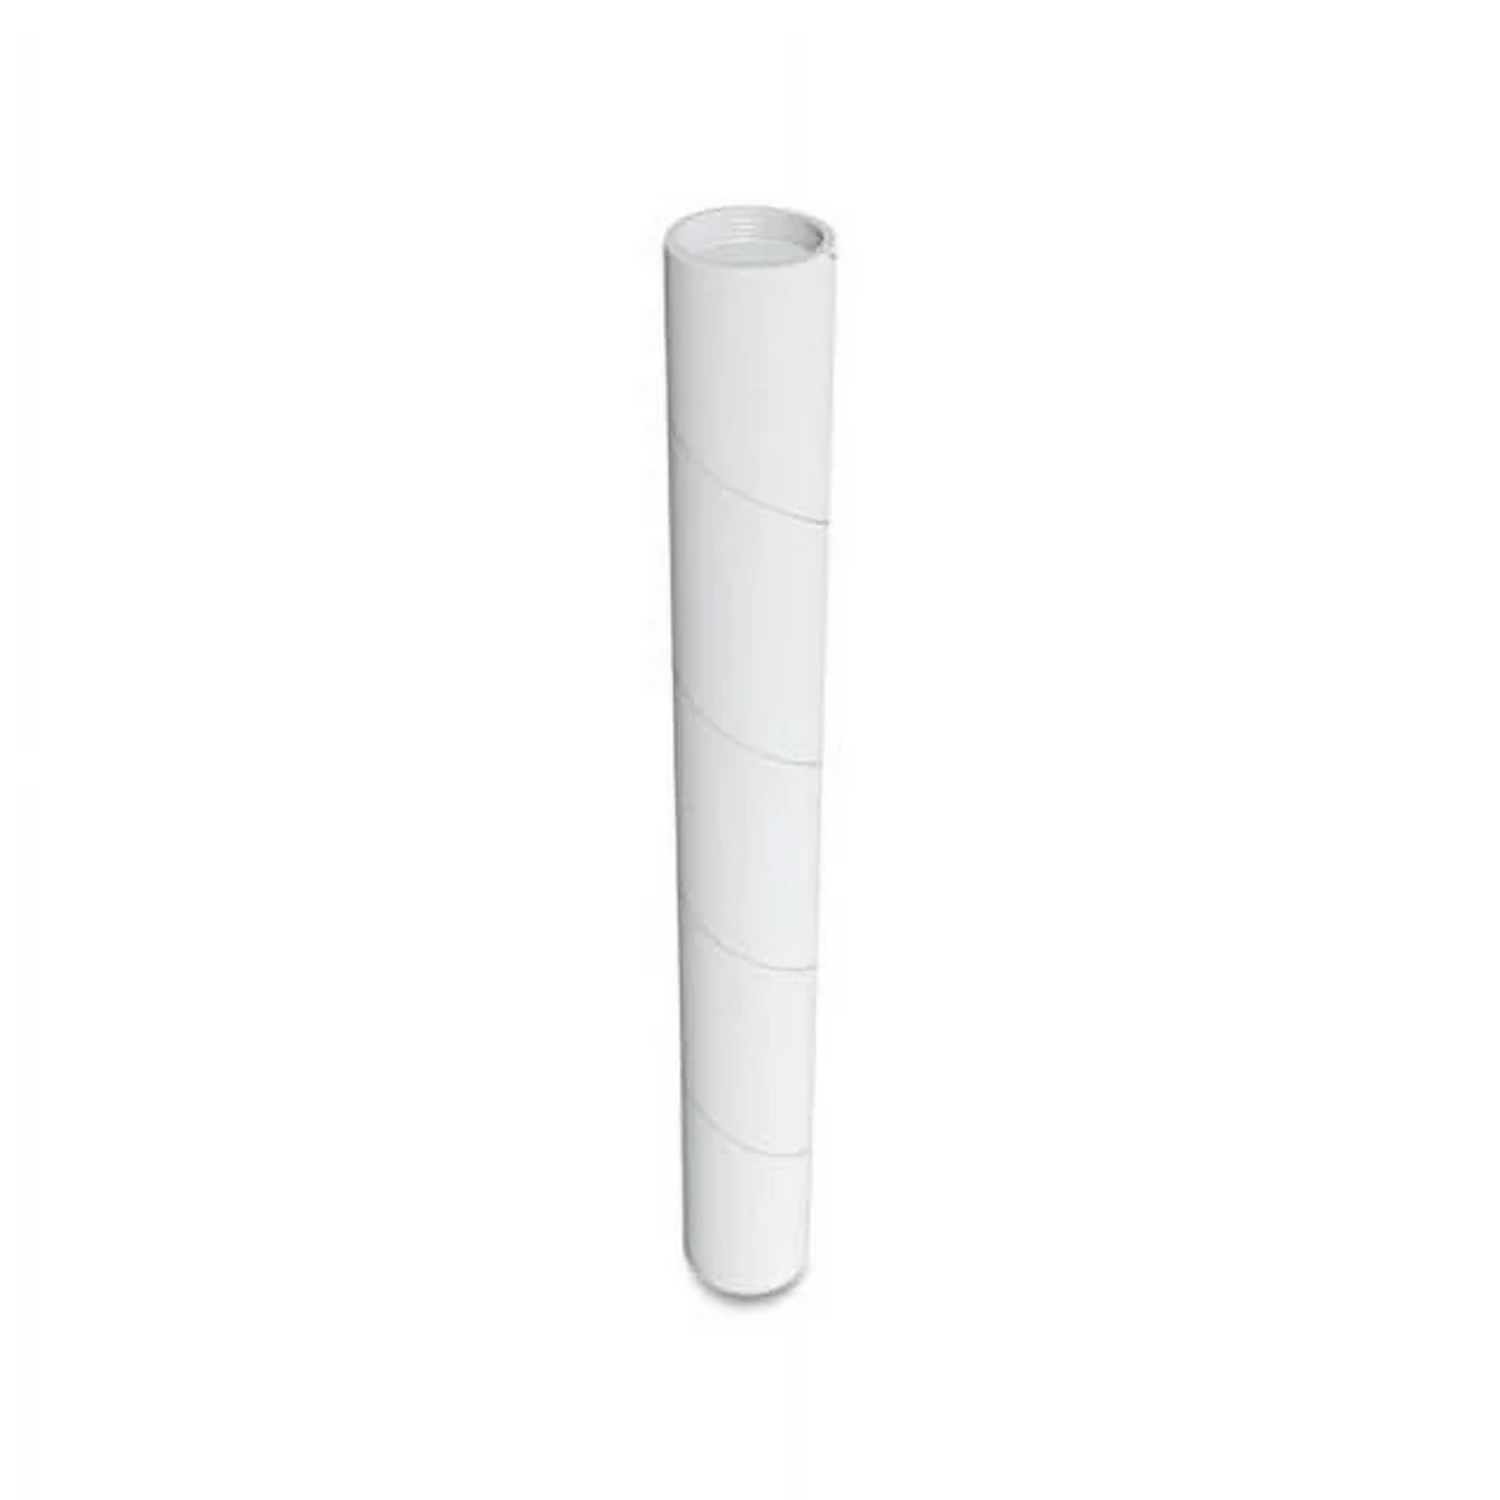 White Cardboard Poster Storage Tubes Document Storage Paper Shopping Tubes 